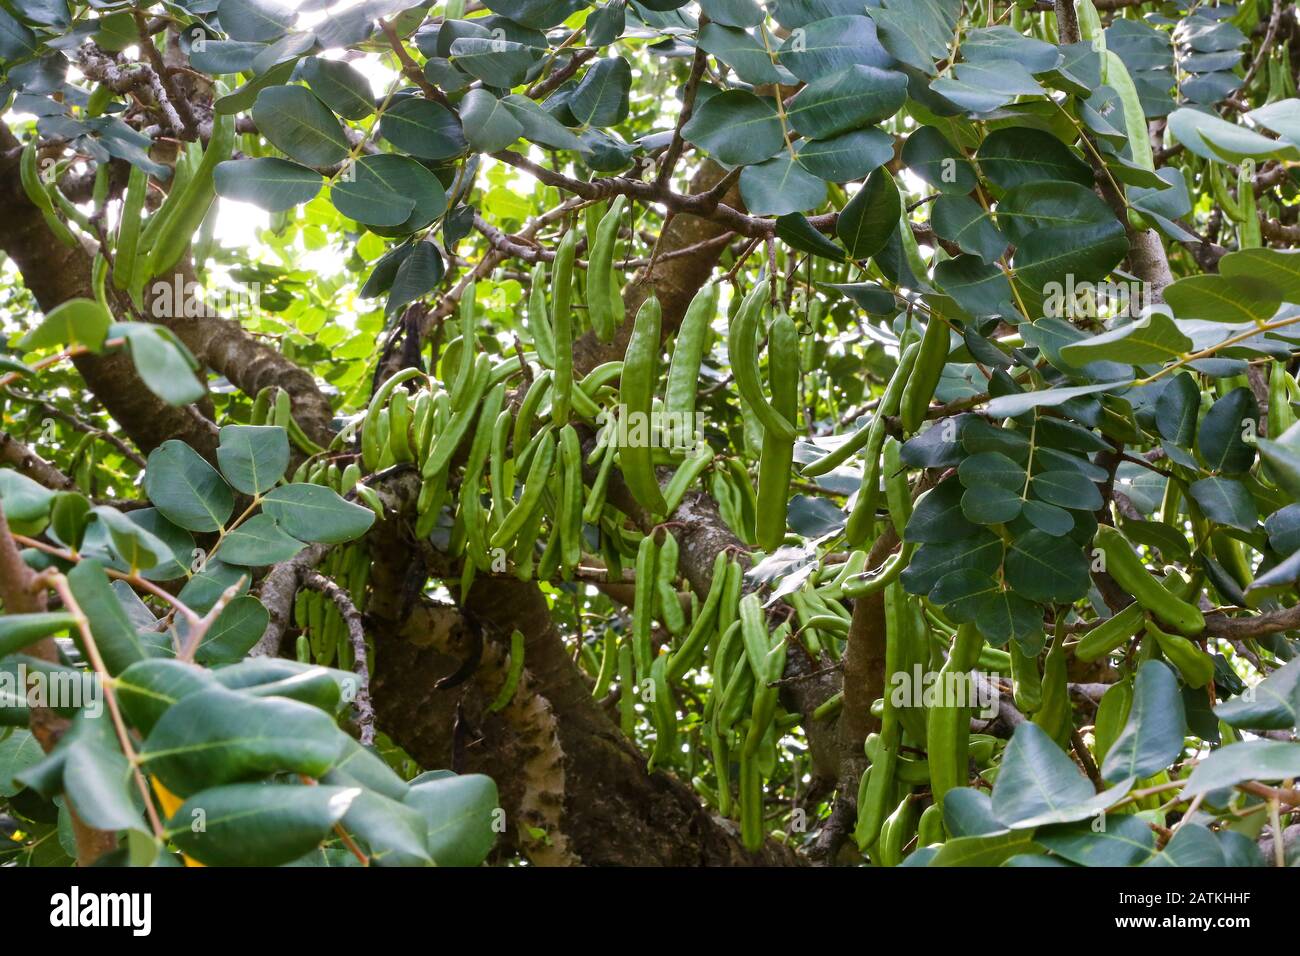 Long bean like pods of the Carob Tree (Ceratonia siliqua), a species of flowering evergreen tree in the pea family, Croatia Stock Photo